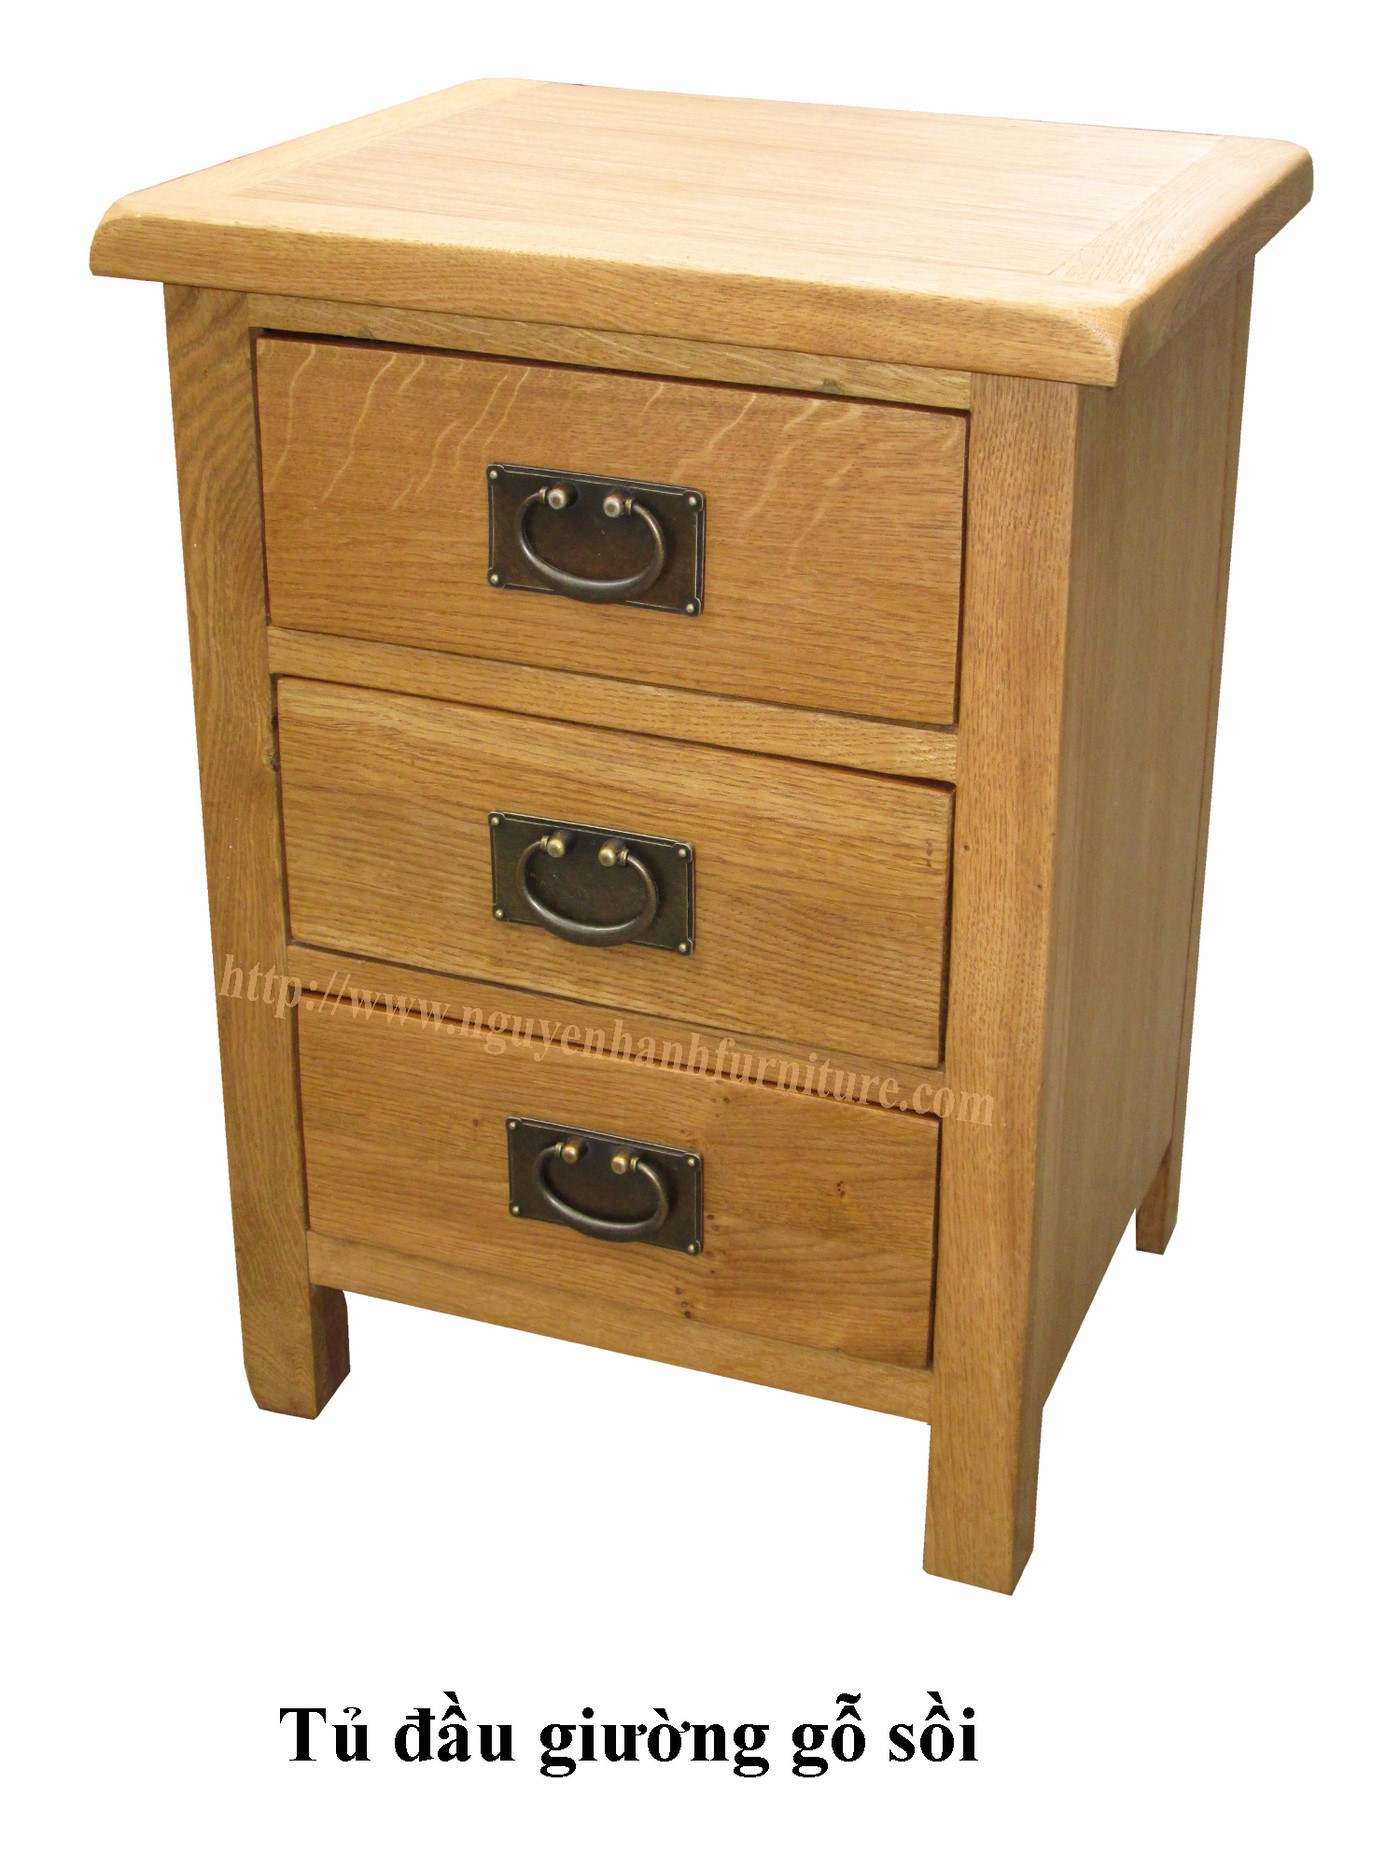 Name product: Headboard cabinet - Dimensions:  - Description: Natural oak wood